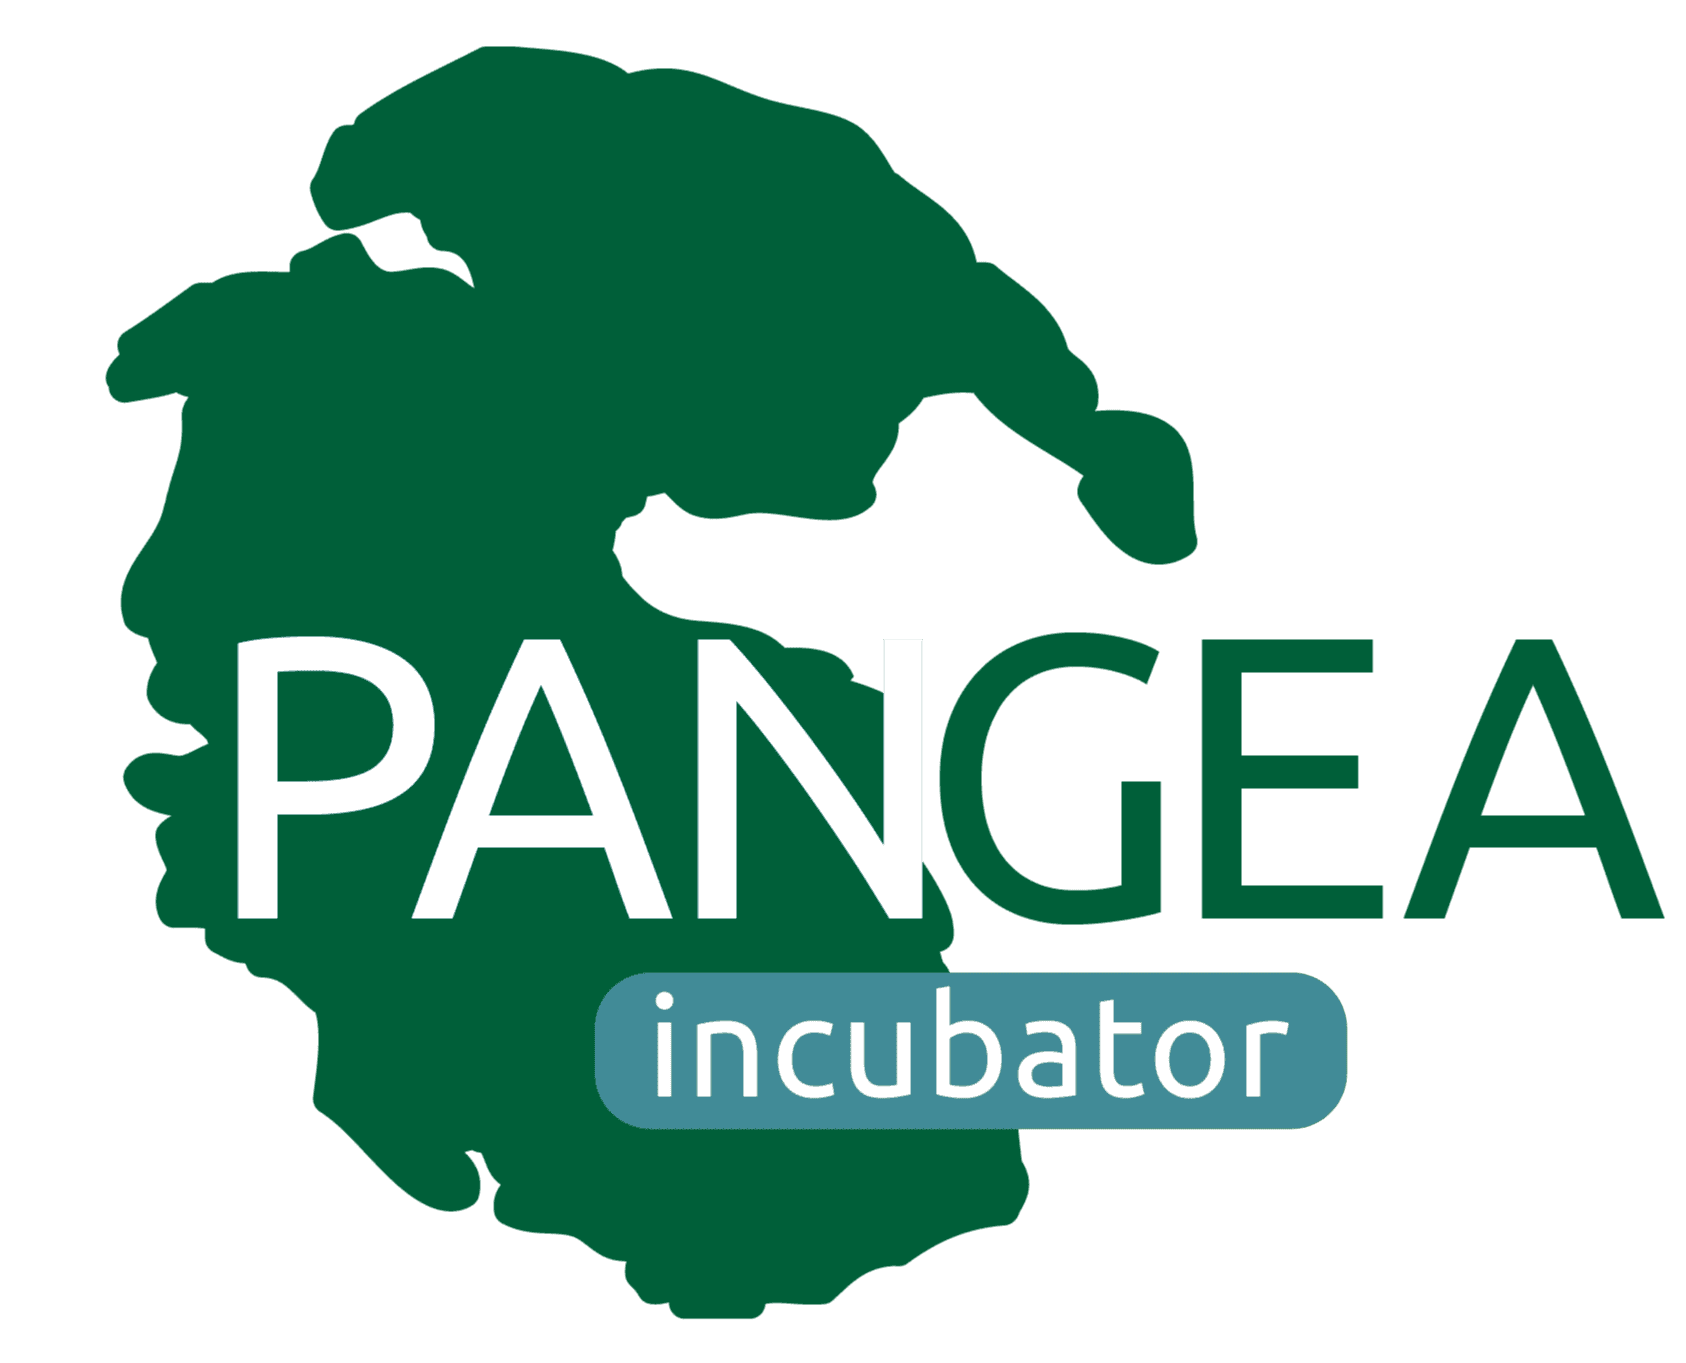 Pangea Incubator